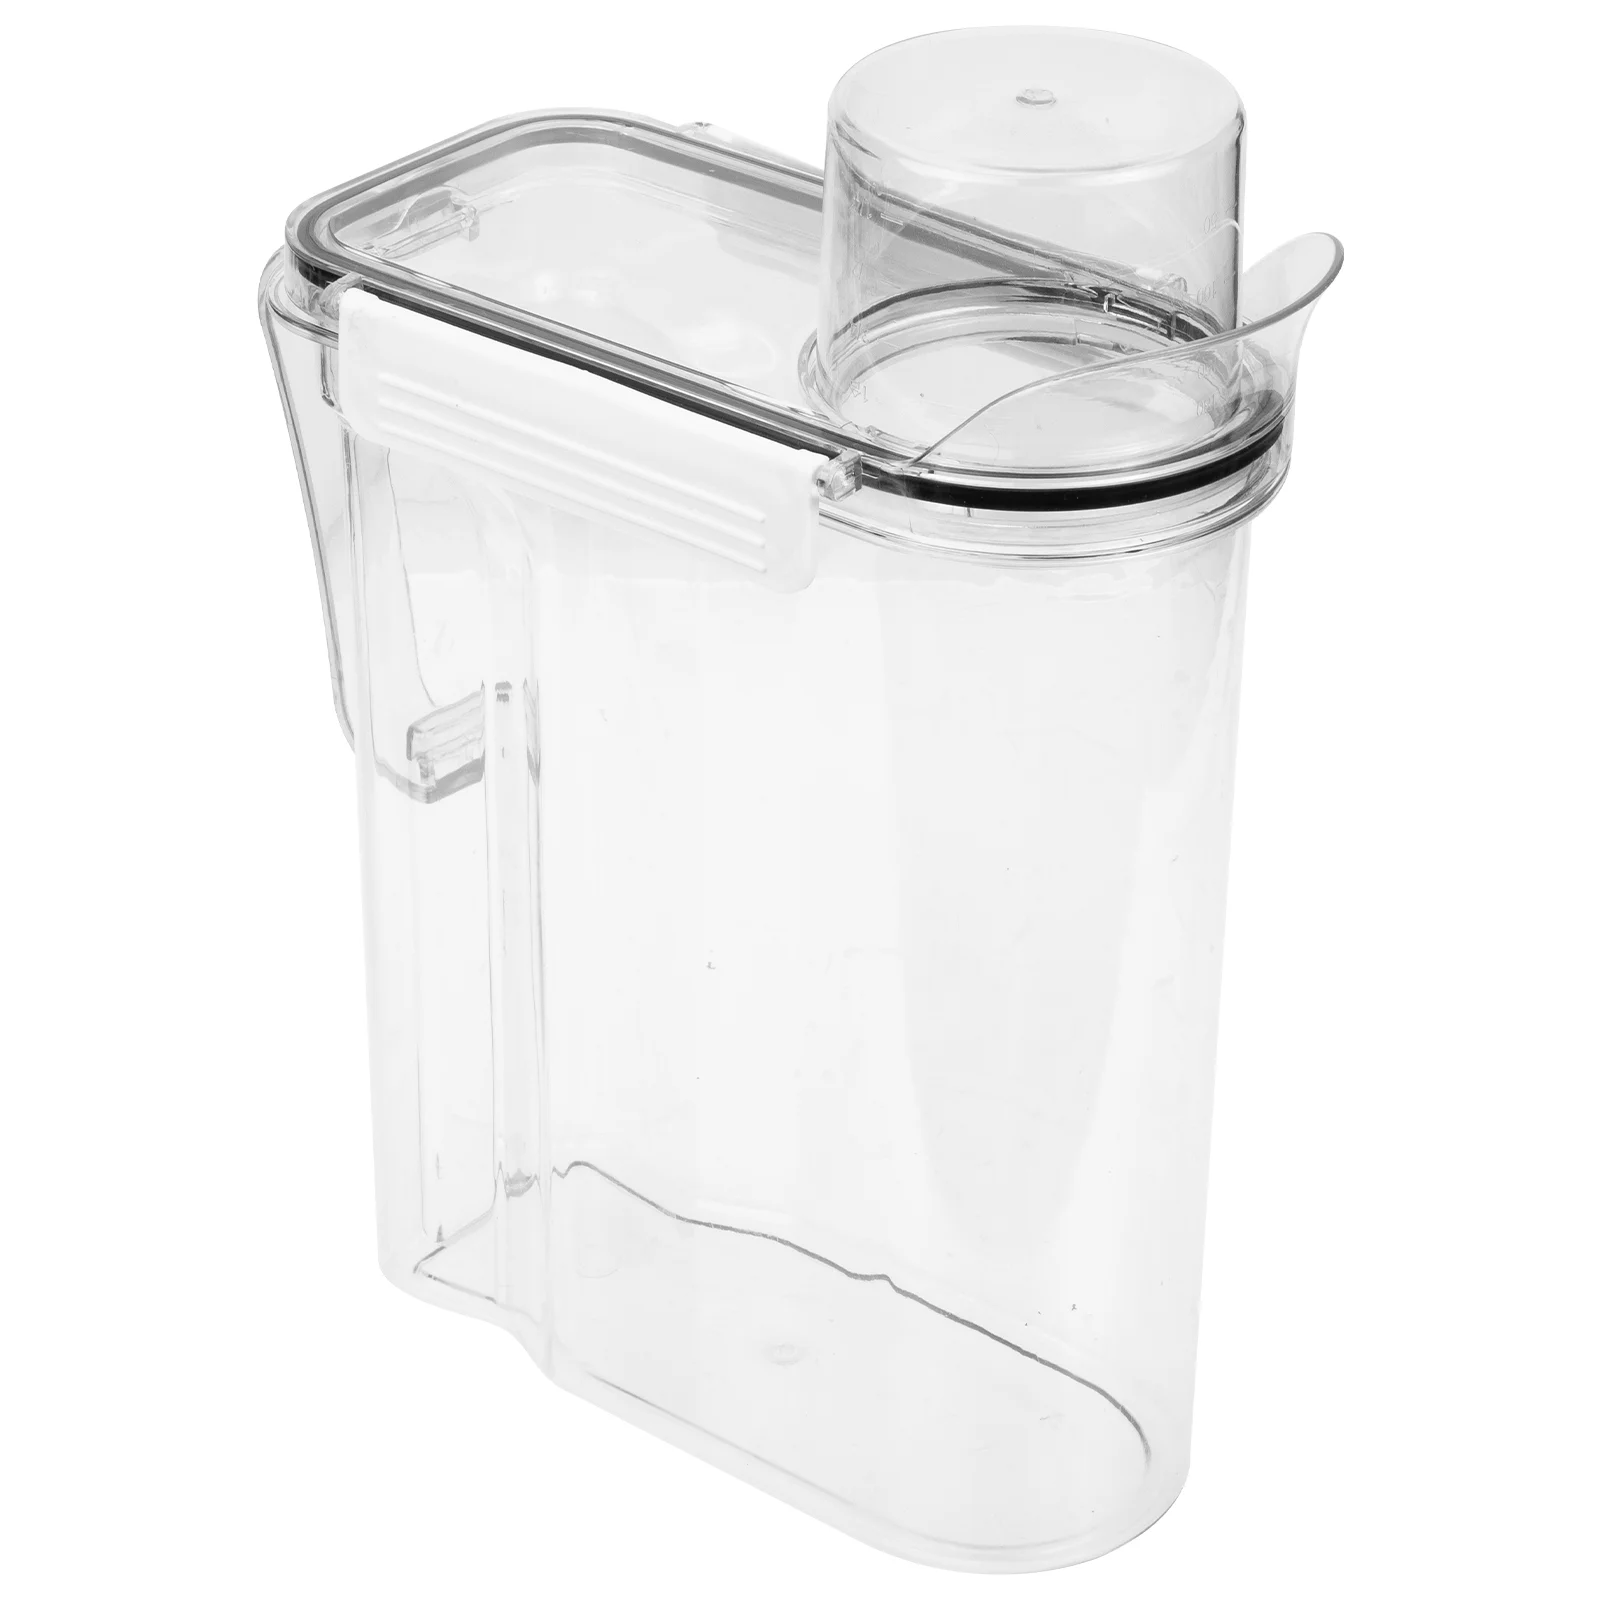 

Laundry Detergent Container Dispenser Holder Sub Bucket Soap Bottle Lotion Box Guest Essentials Bathroom Storage Washing Beads